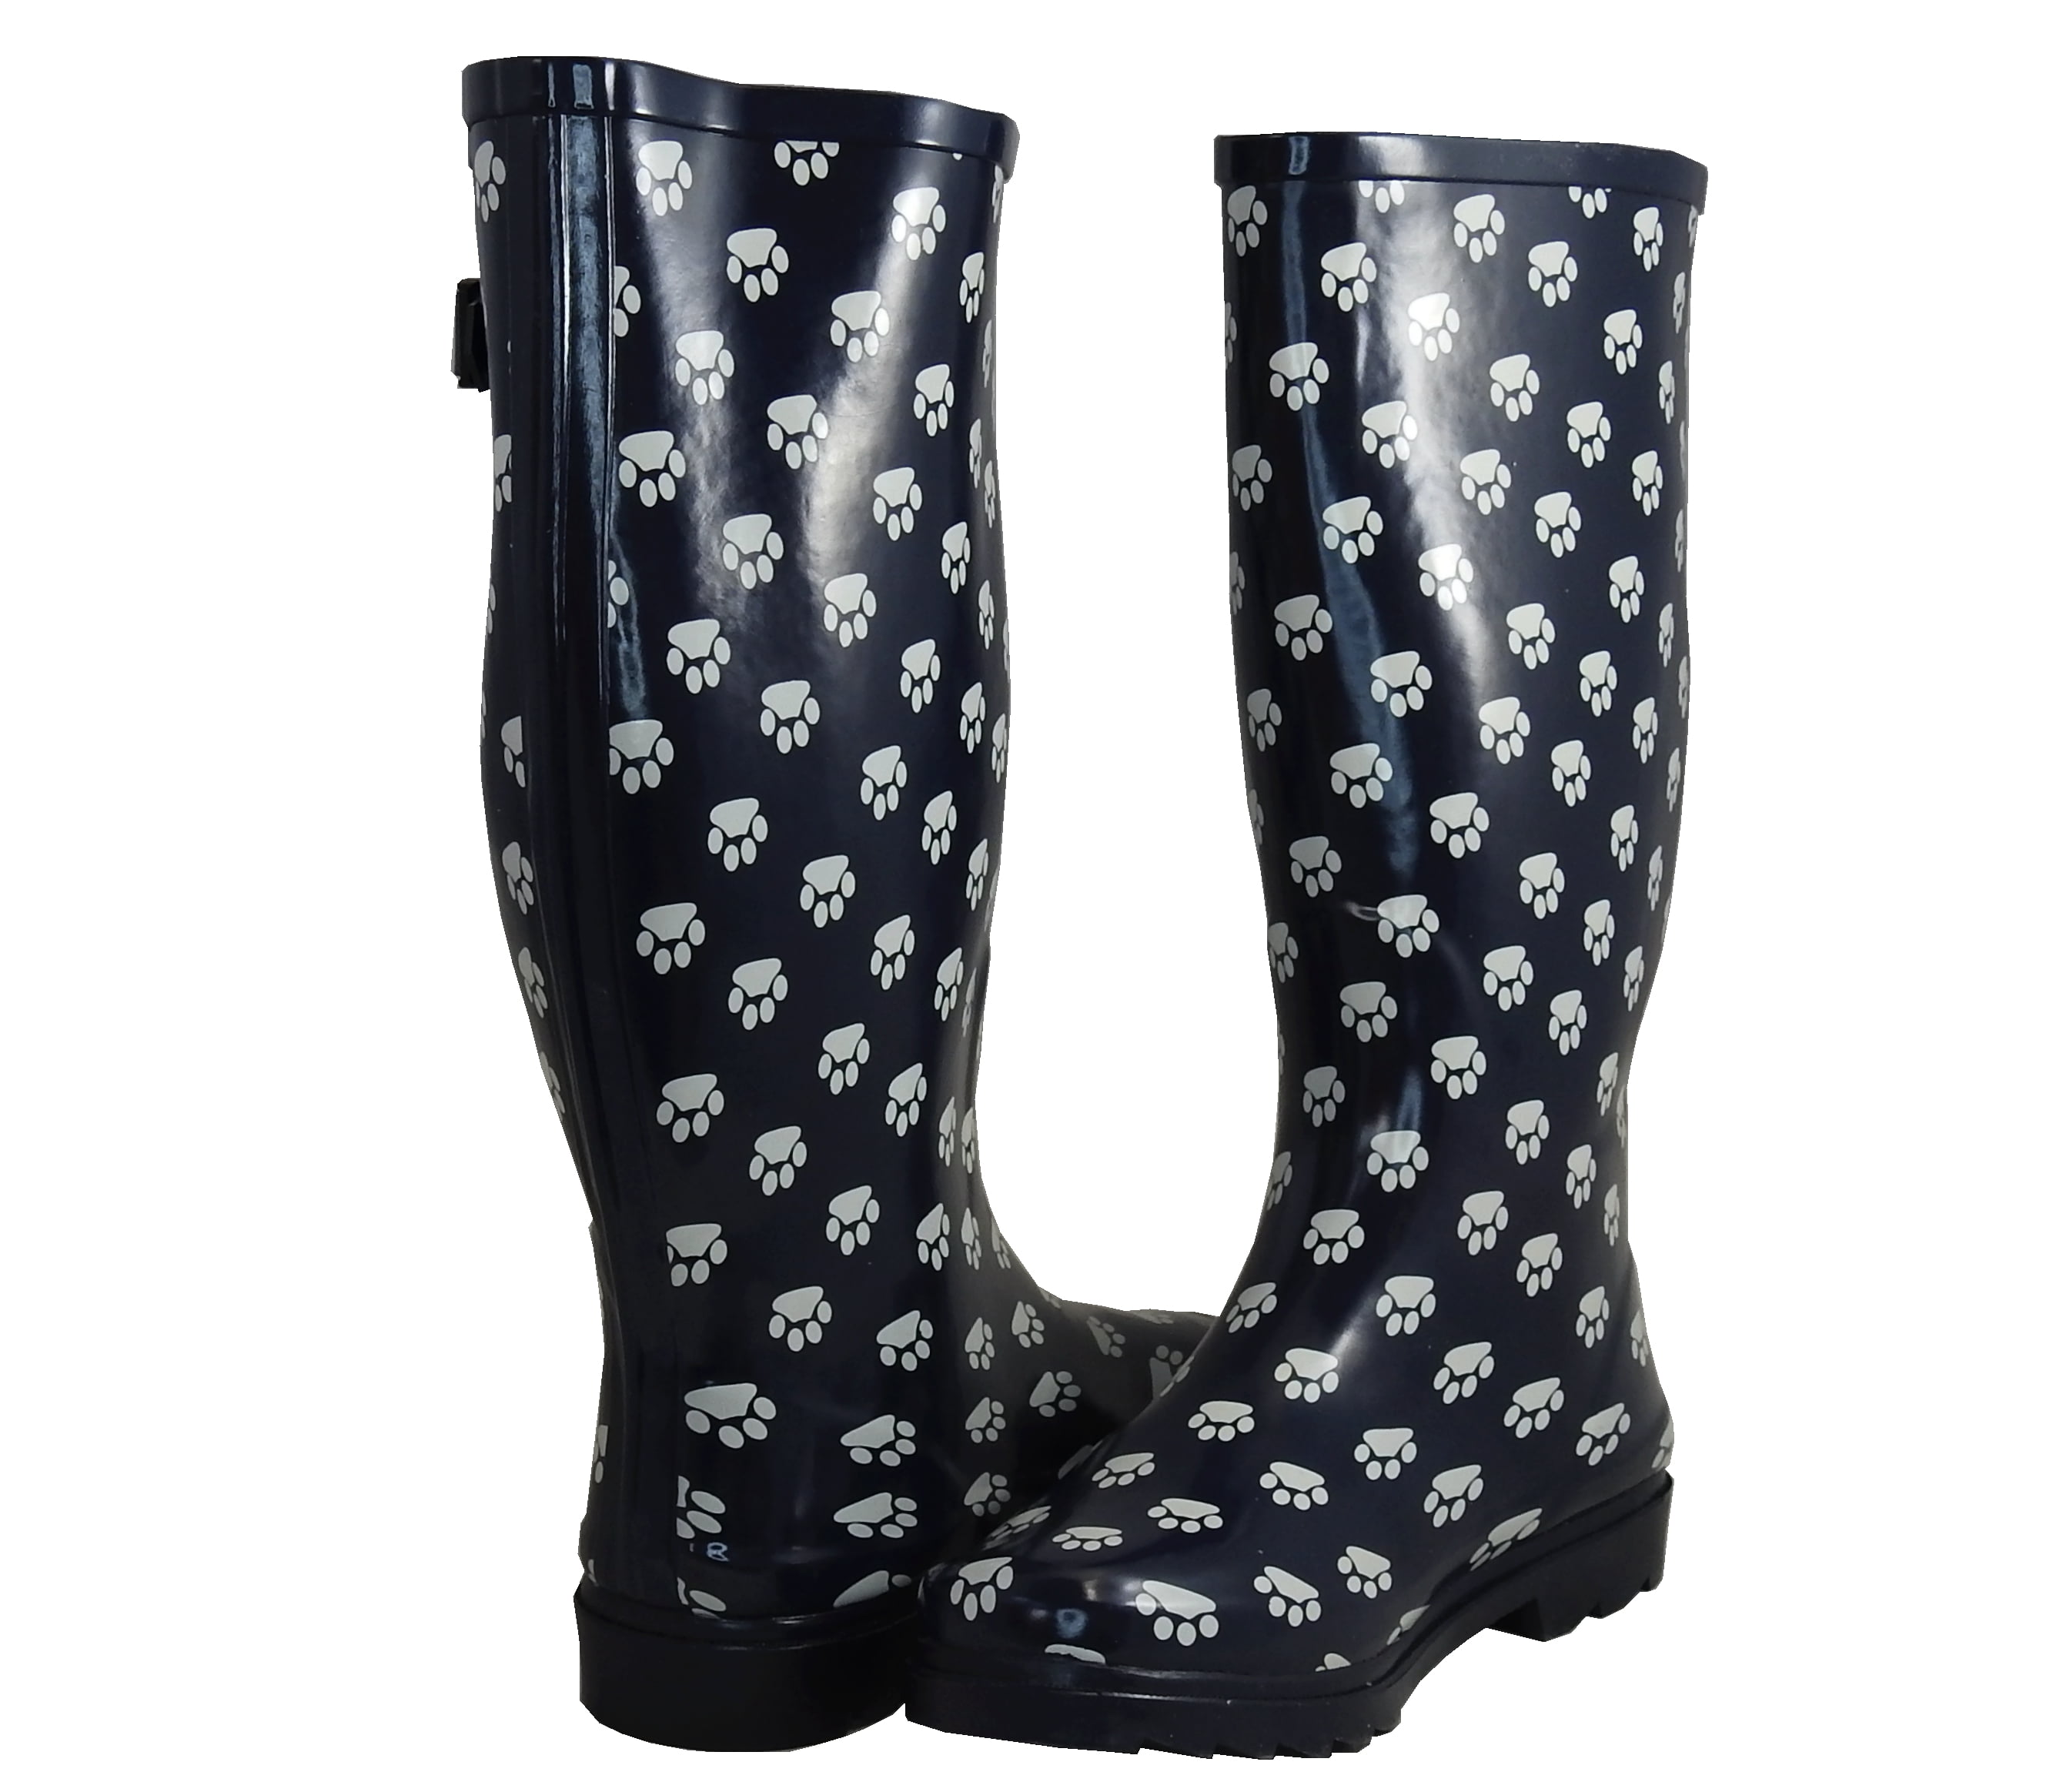 Starbay Women's Rubber Rain Boots, Houndstooth - Walmart.com